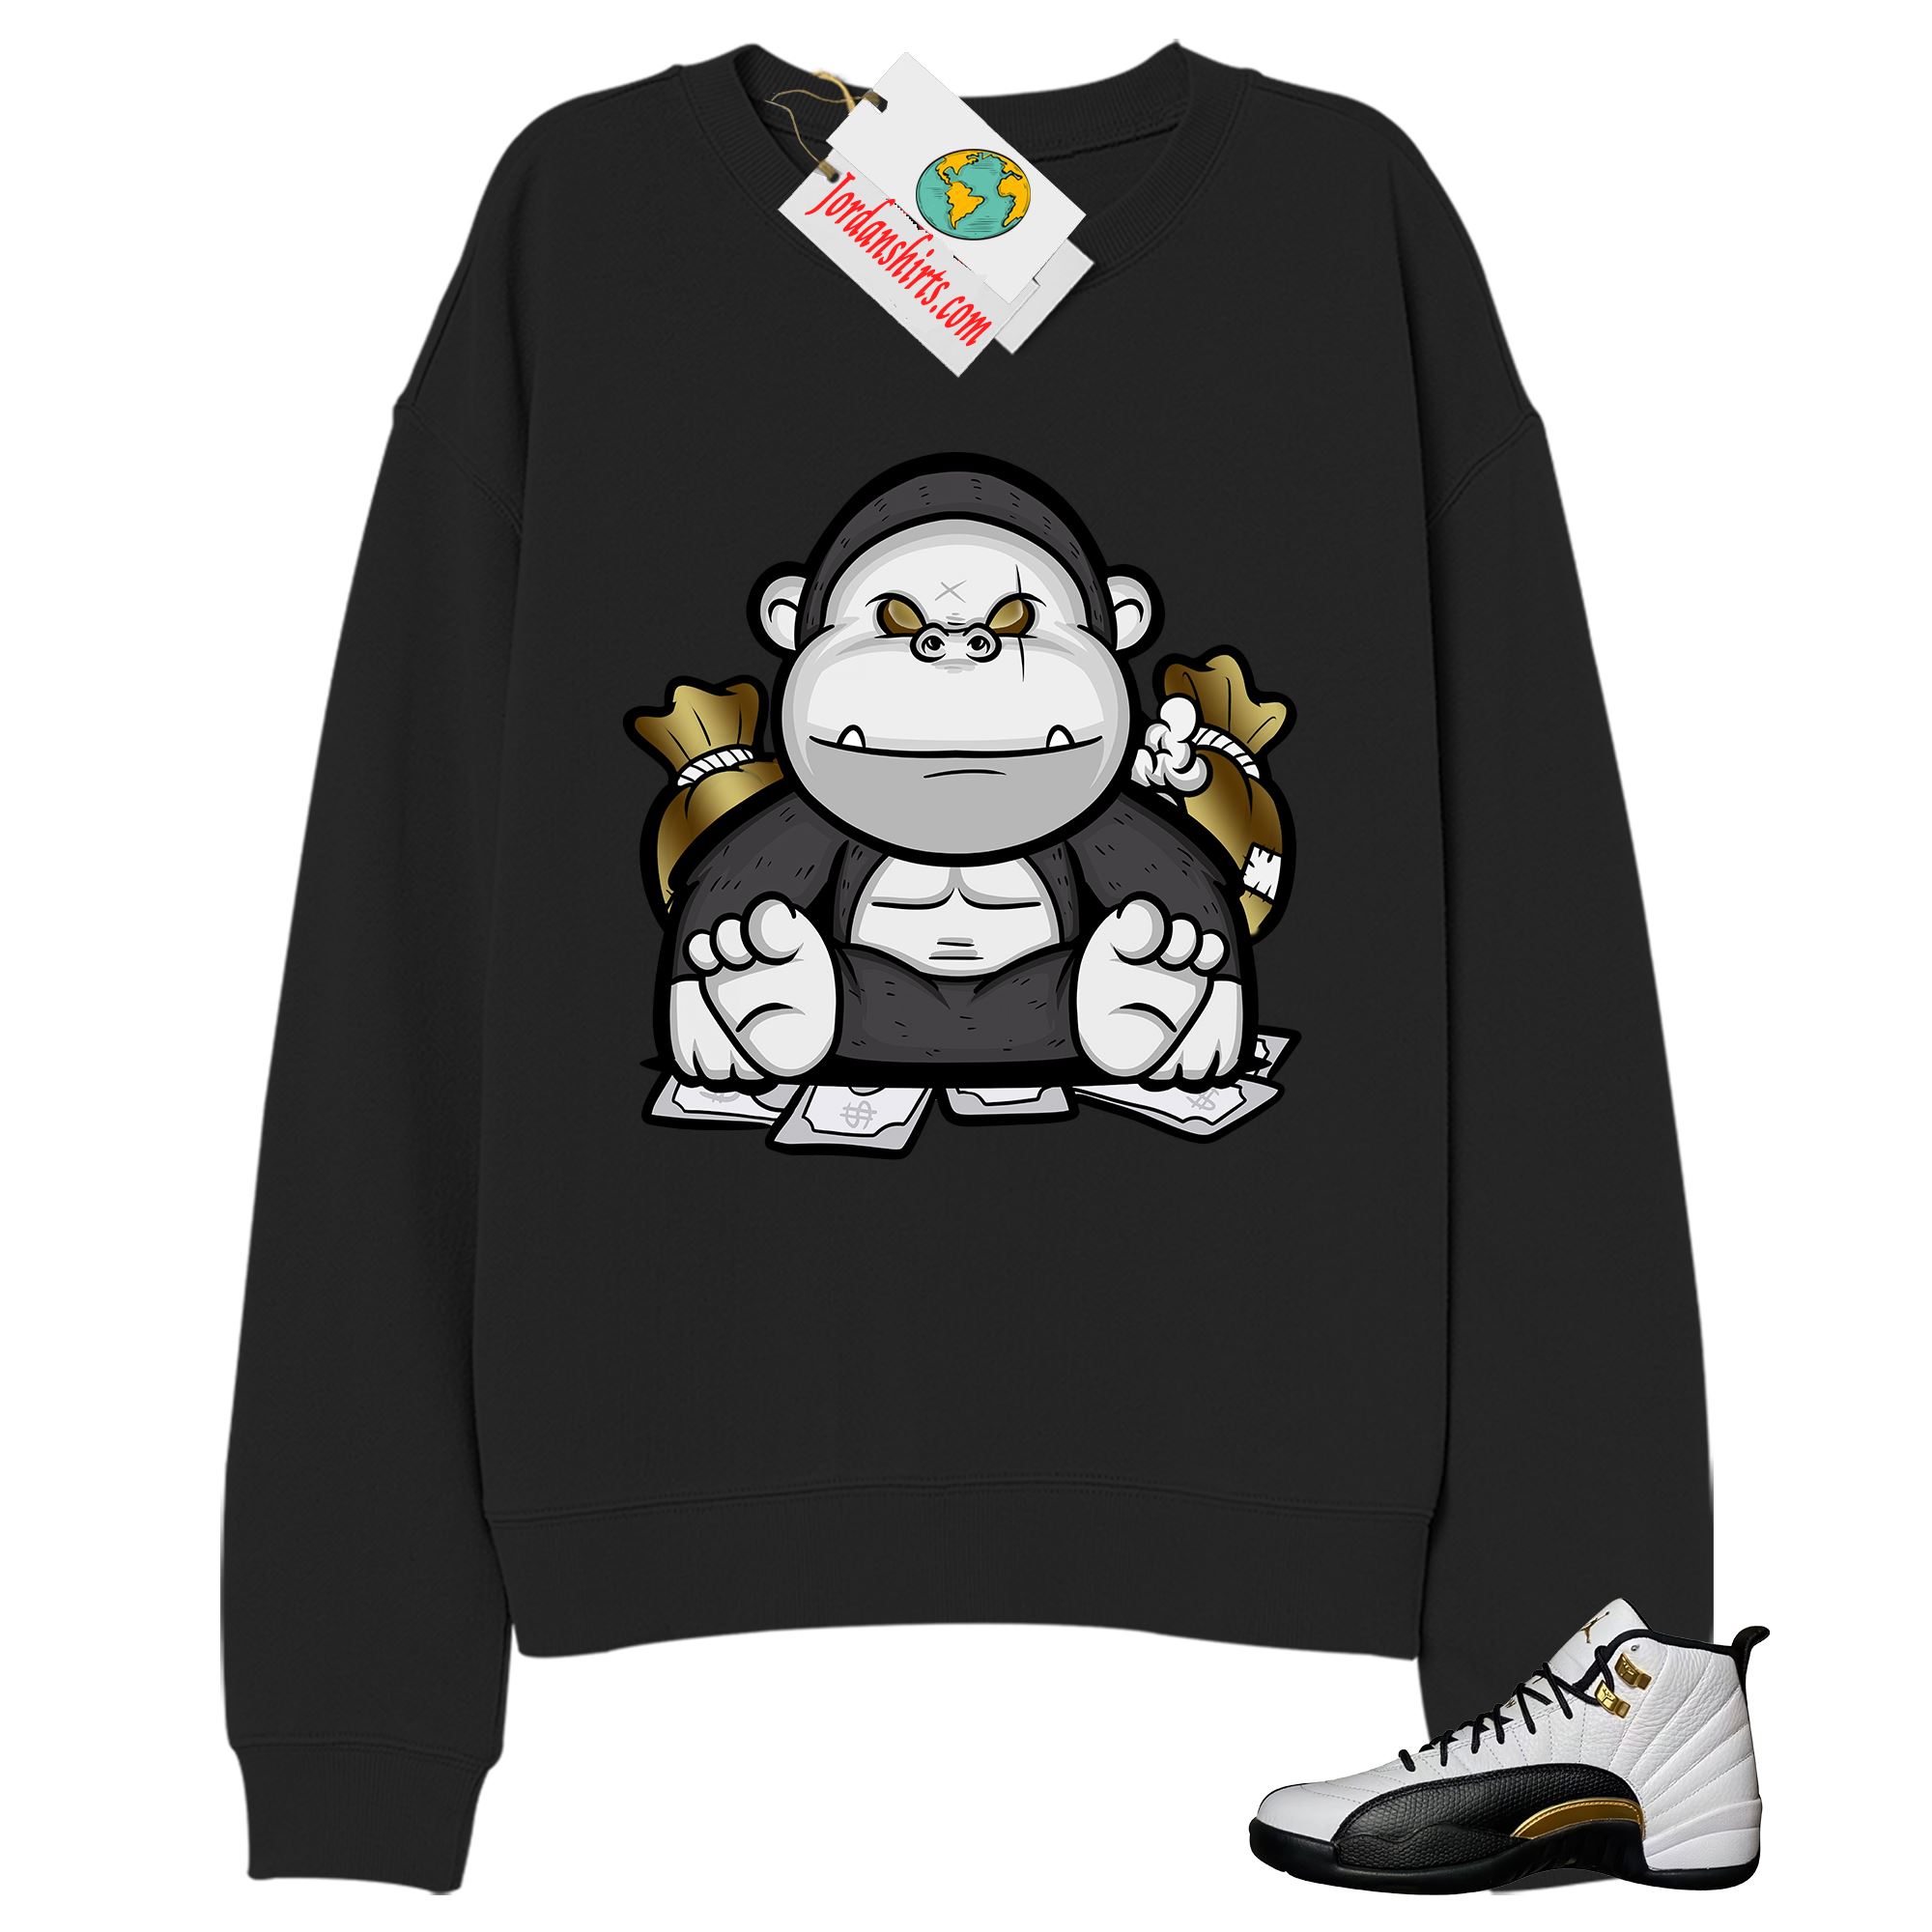 Jordan 12 Sweatshirt, Rich Gorilla With Money Black Sweatshirt Air Jordan 12 Royalty 12s Full Size Up To 5xl